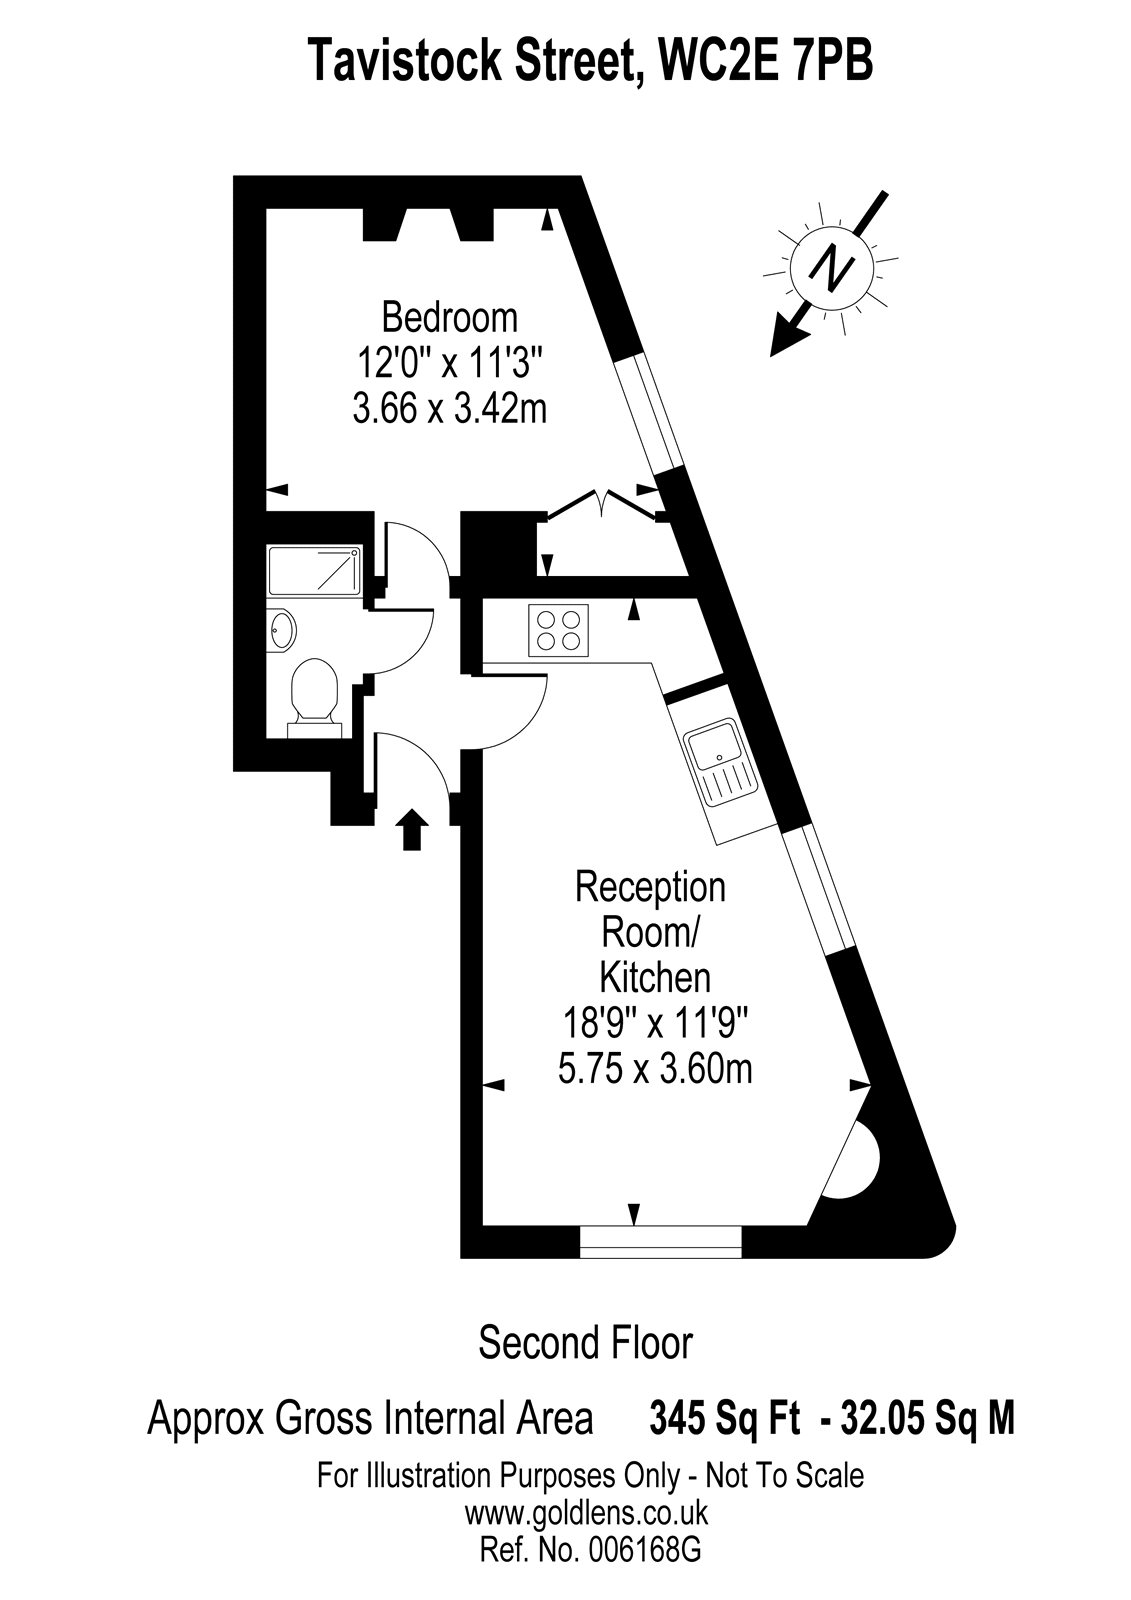 1 Bedrooms  to rent in Tavistock Street, London WC2E